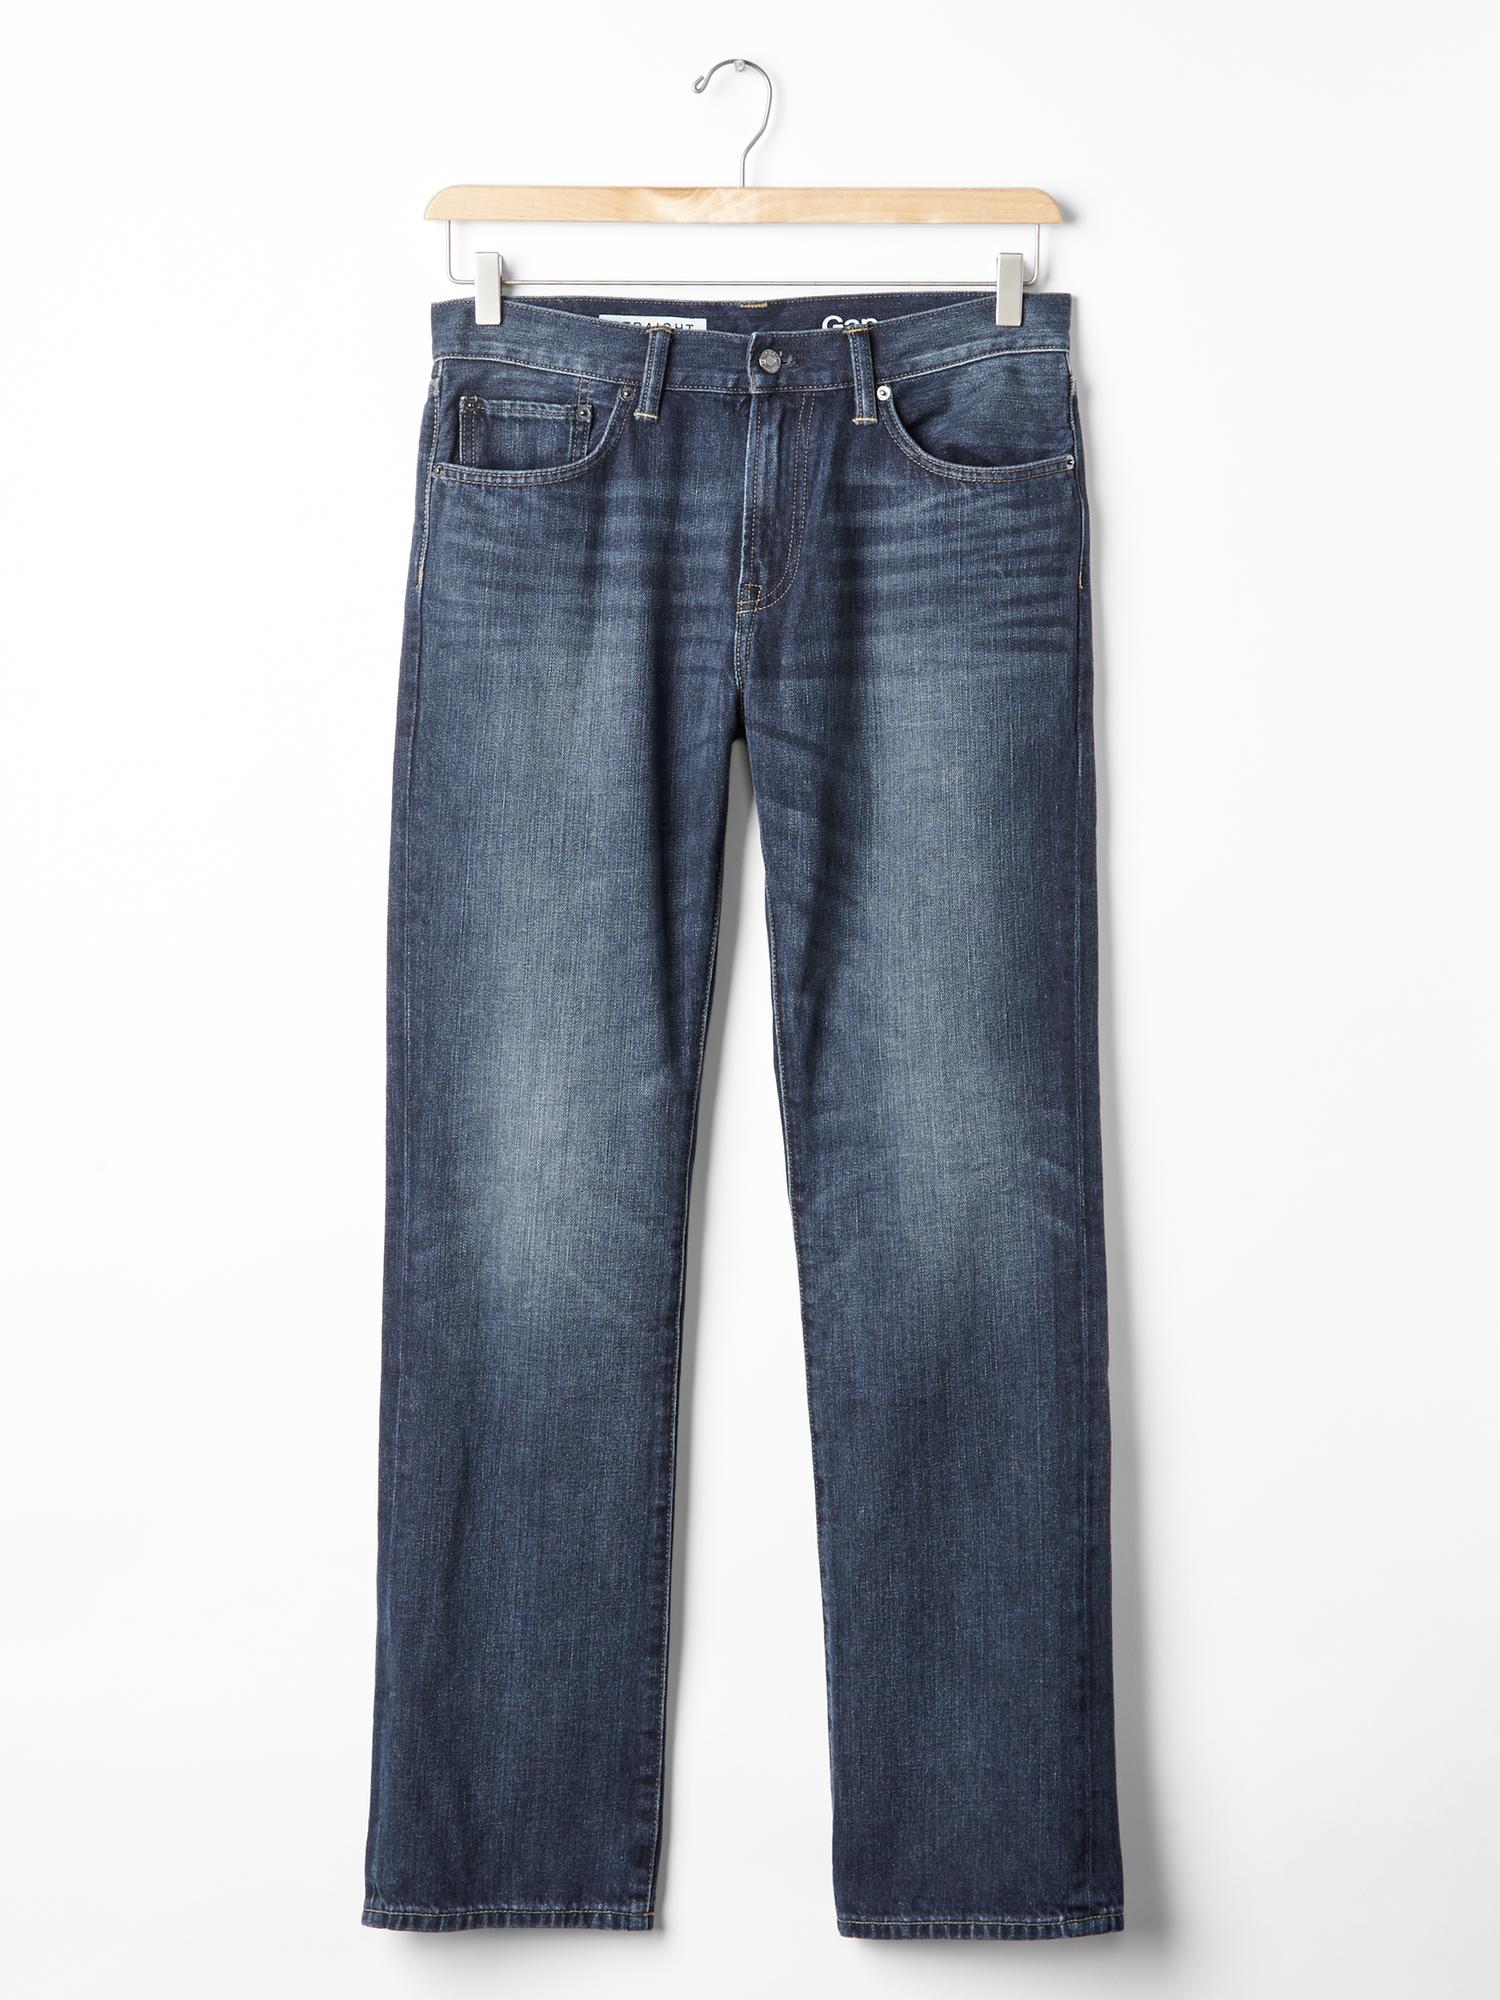 Gap 1969 Straight fit jean pantolon (vintage yıkama). 4